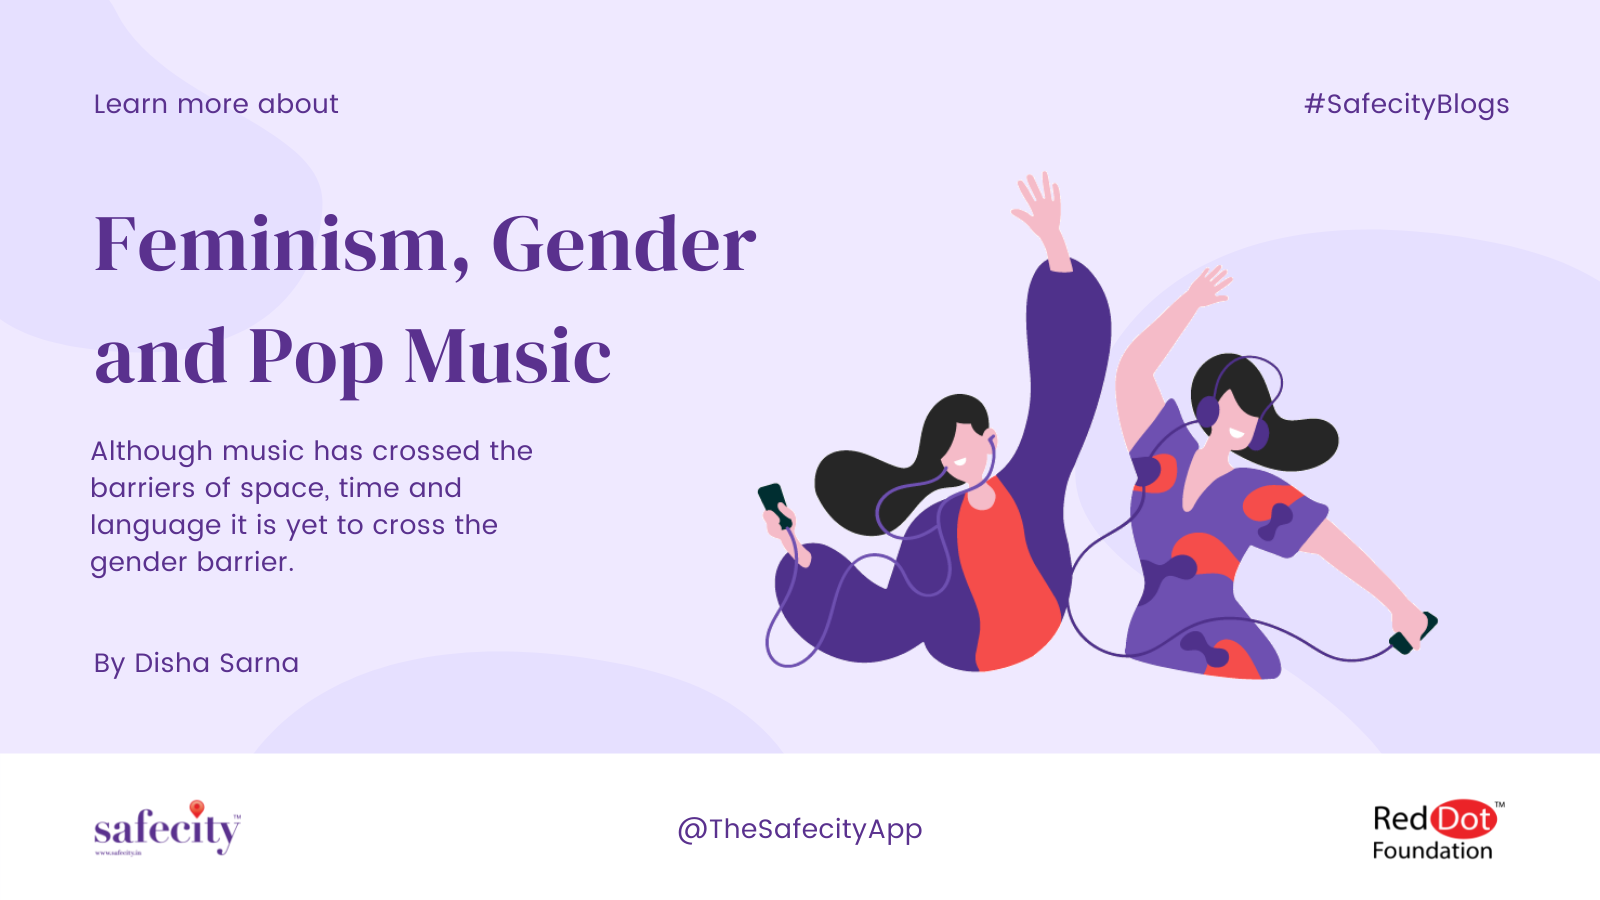 Blog on Feminism, Gender and Pop Music